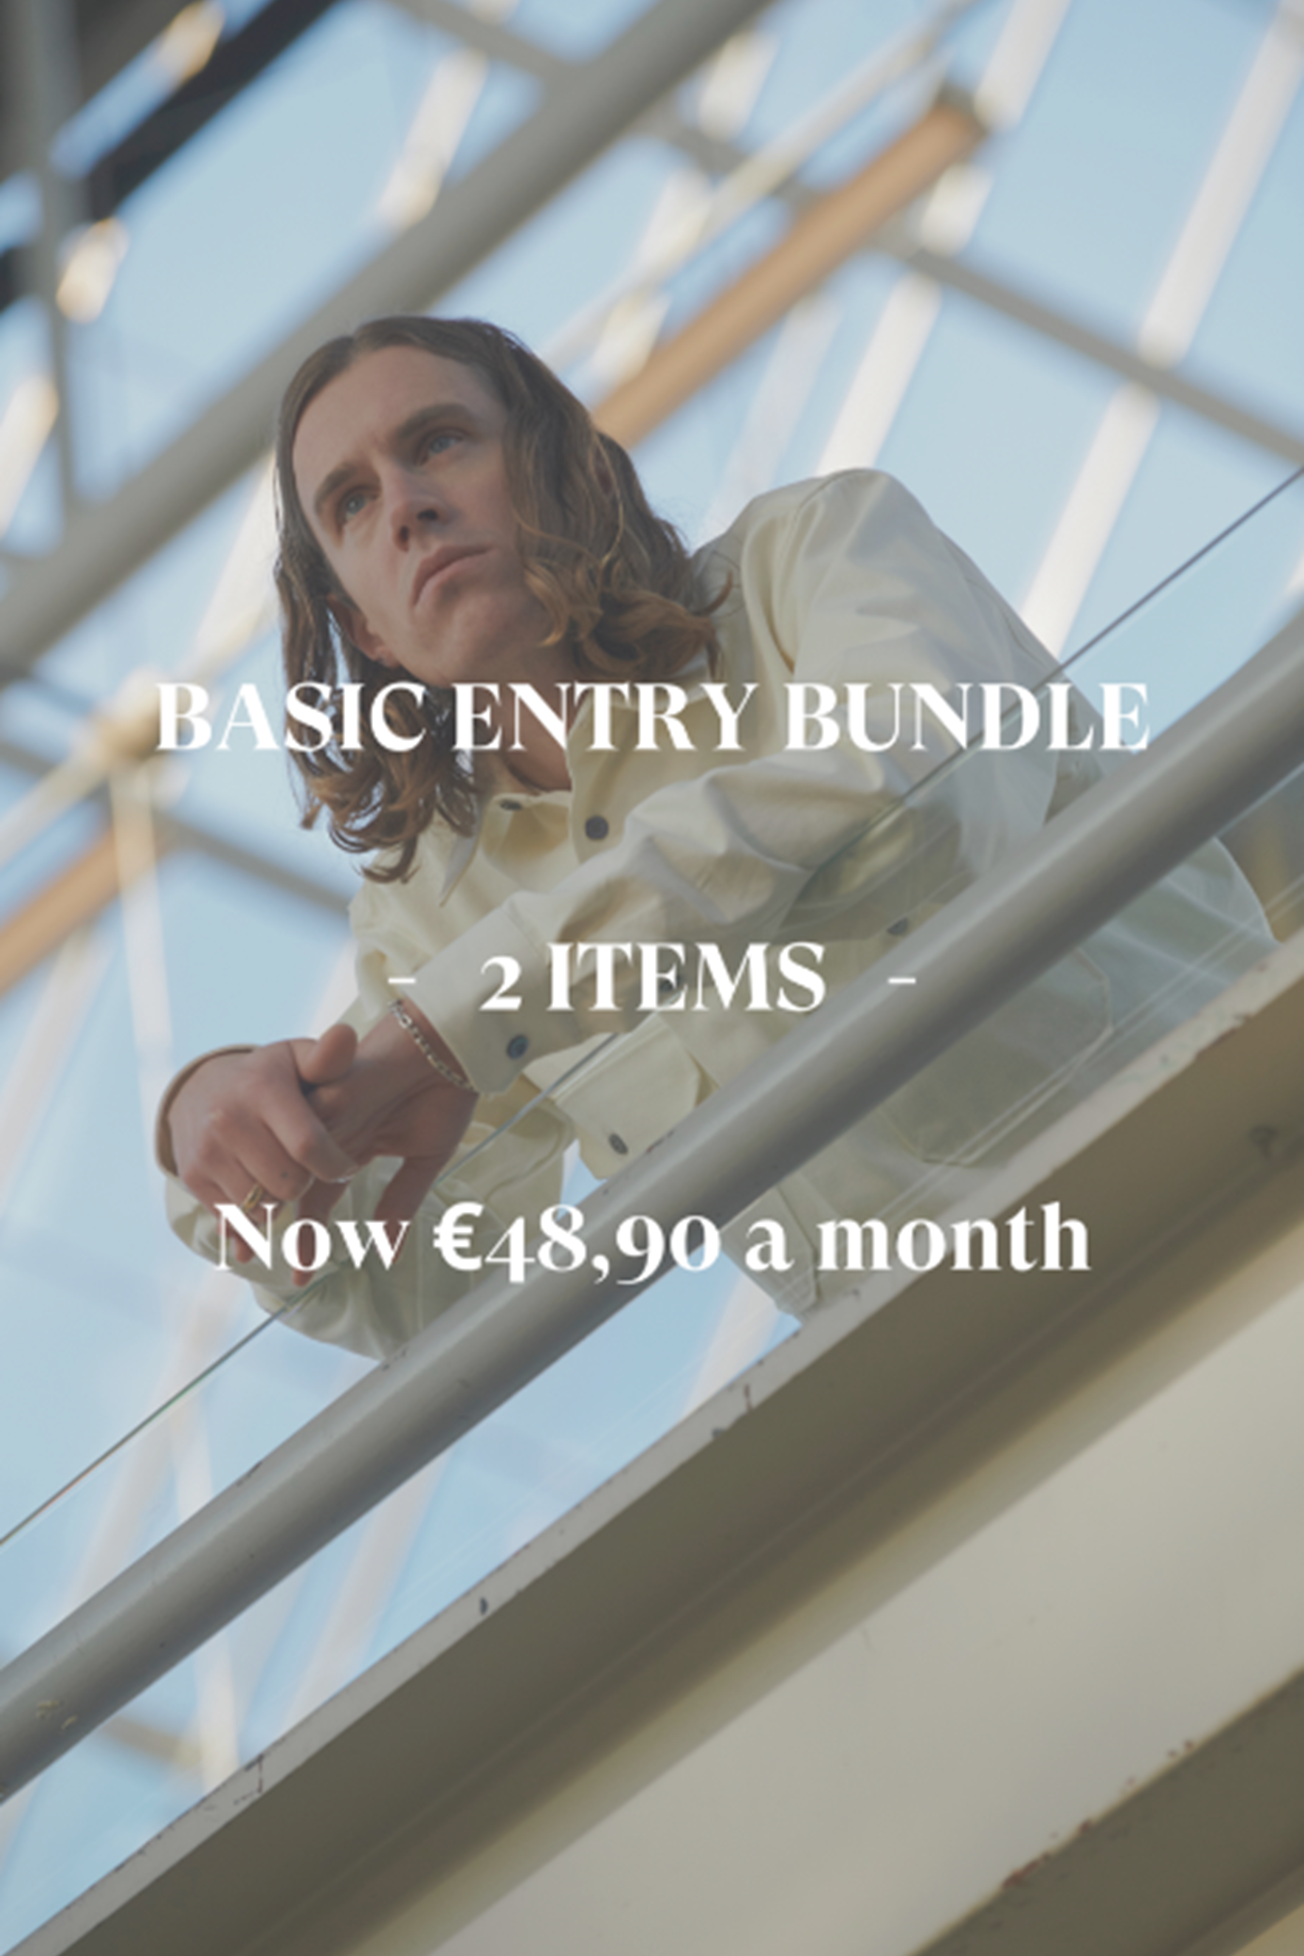 ENTRY BUNDLE - 2 ITEMS €48,90 a month